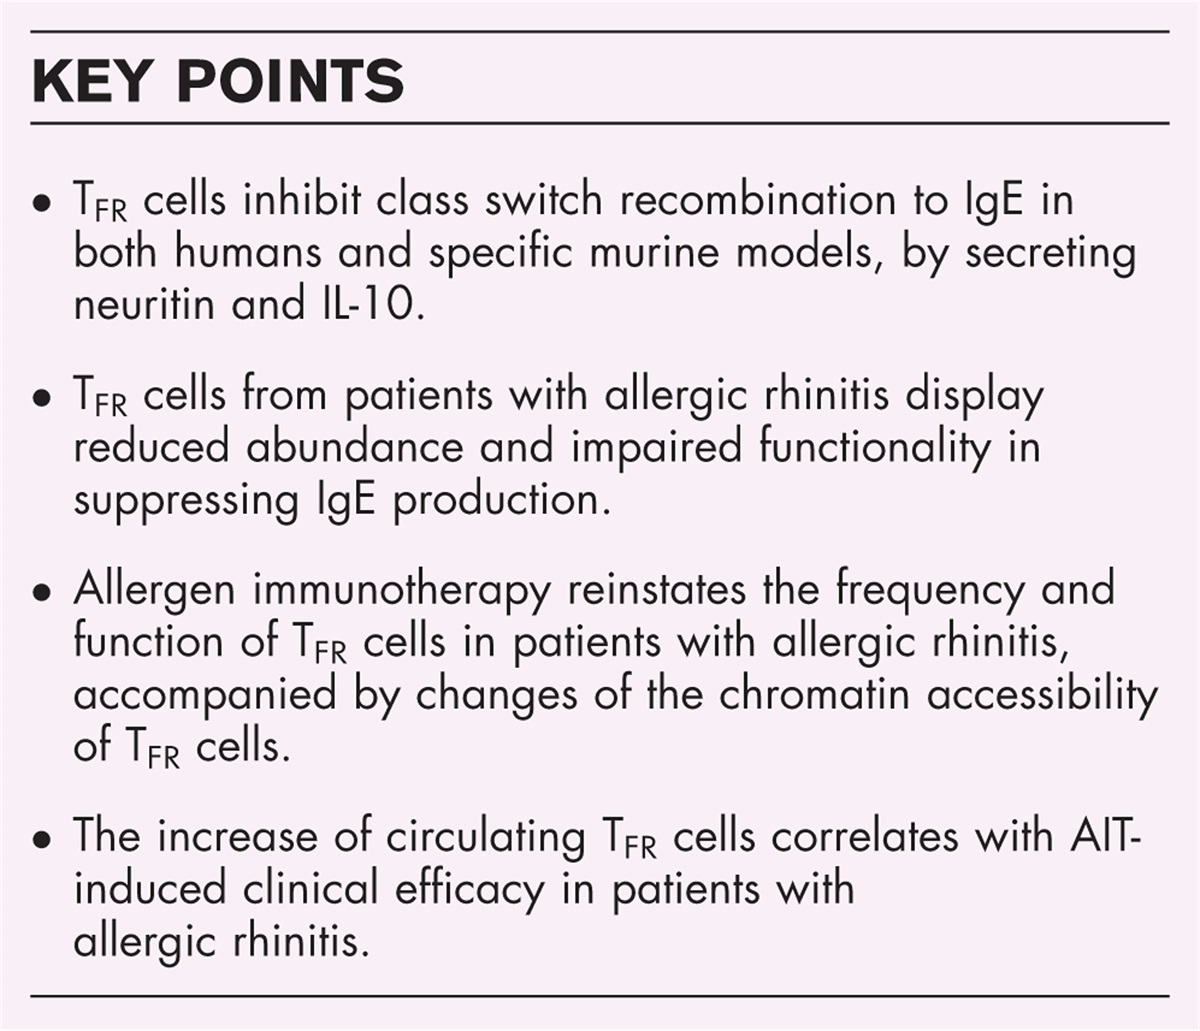 Effects of allergen immunotherapy on follicular regulatory T cells